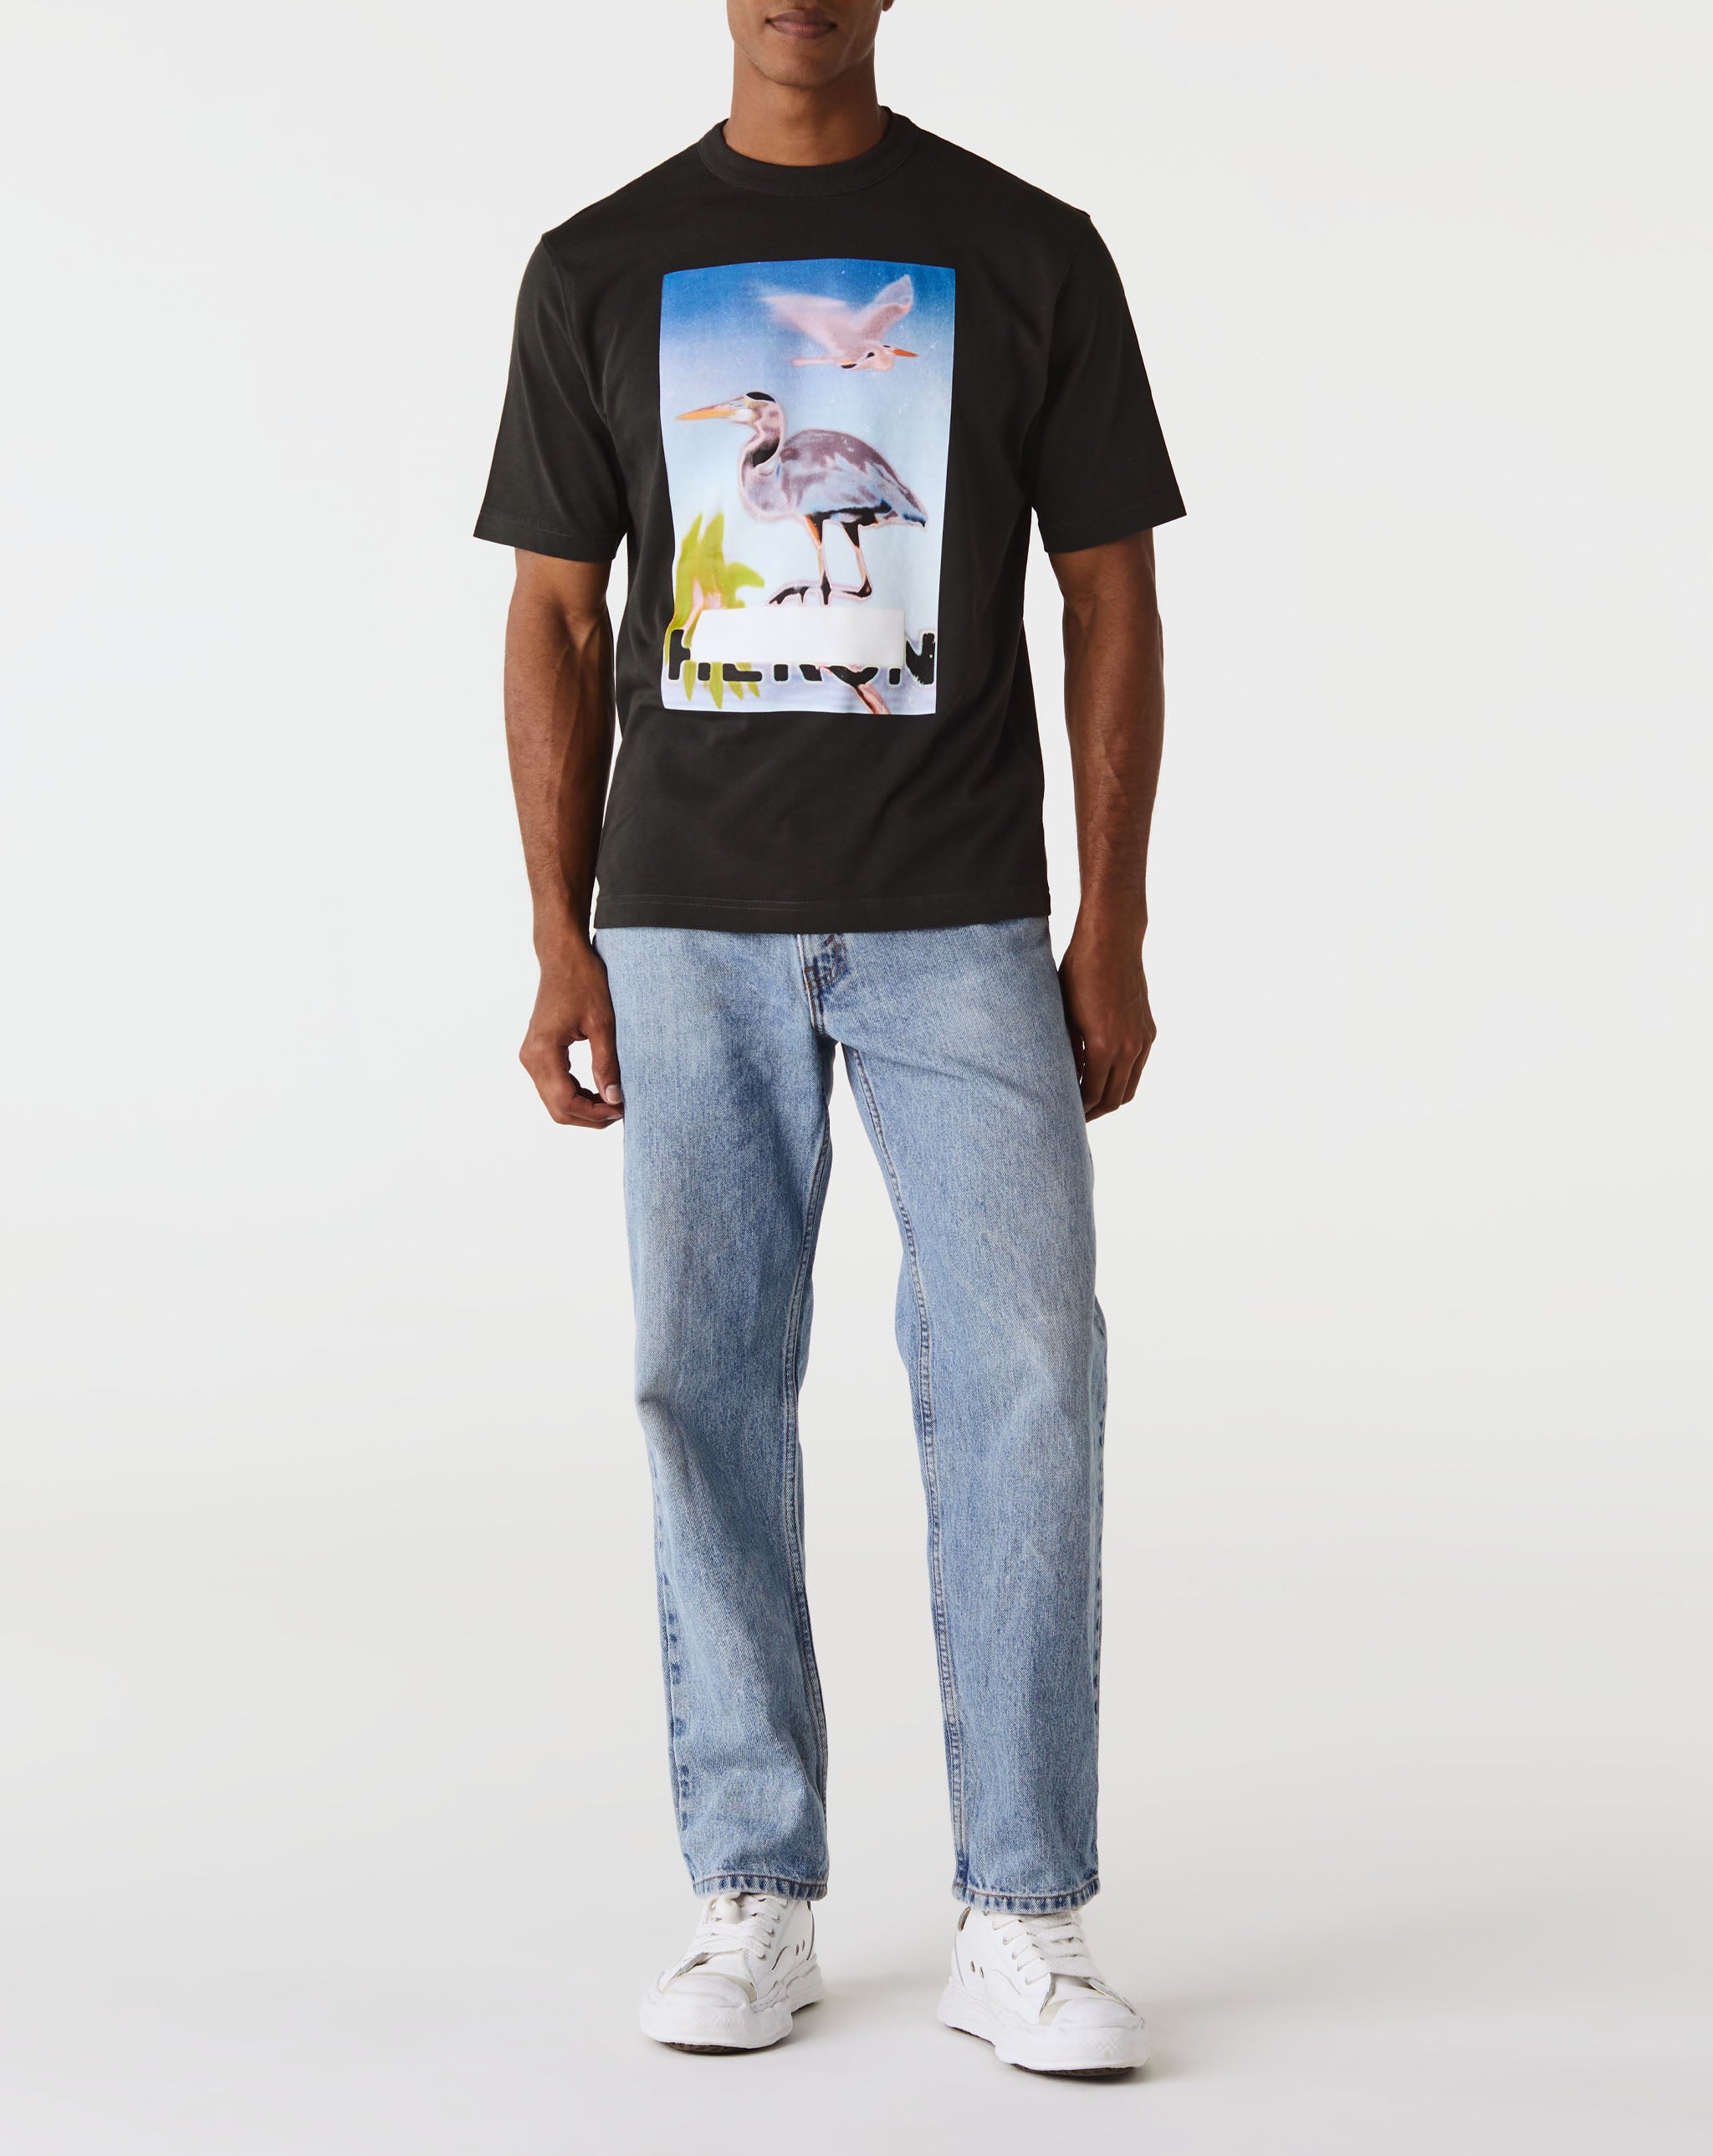 Censored Heron T-Shirt – Xhibition